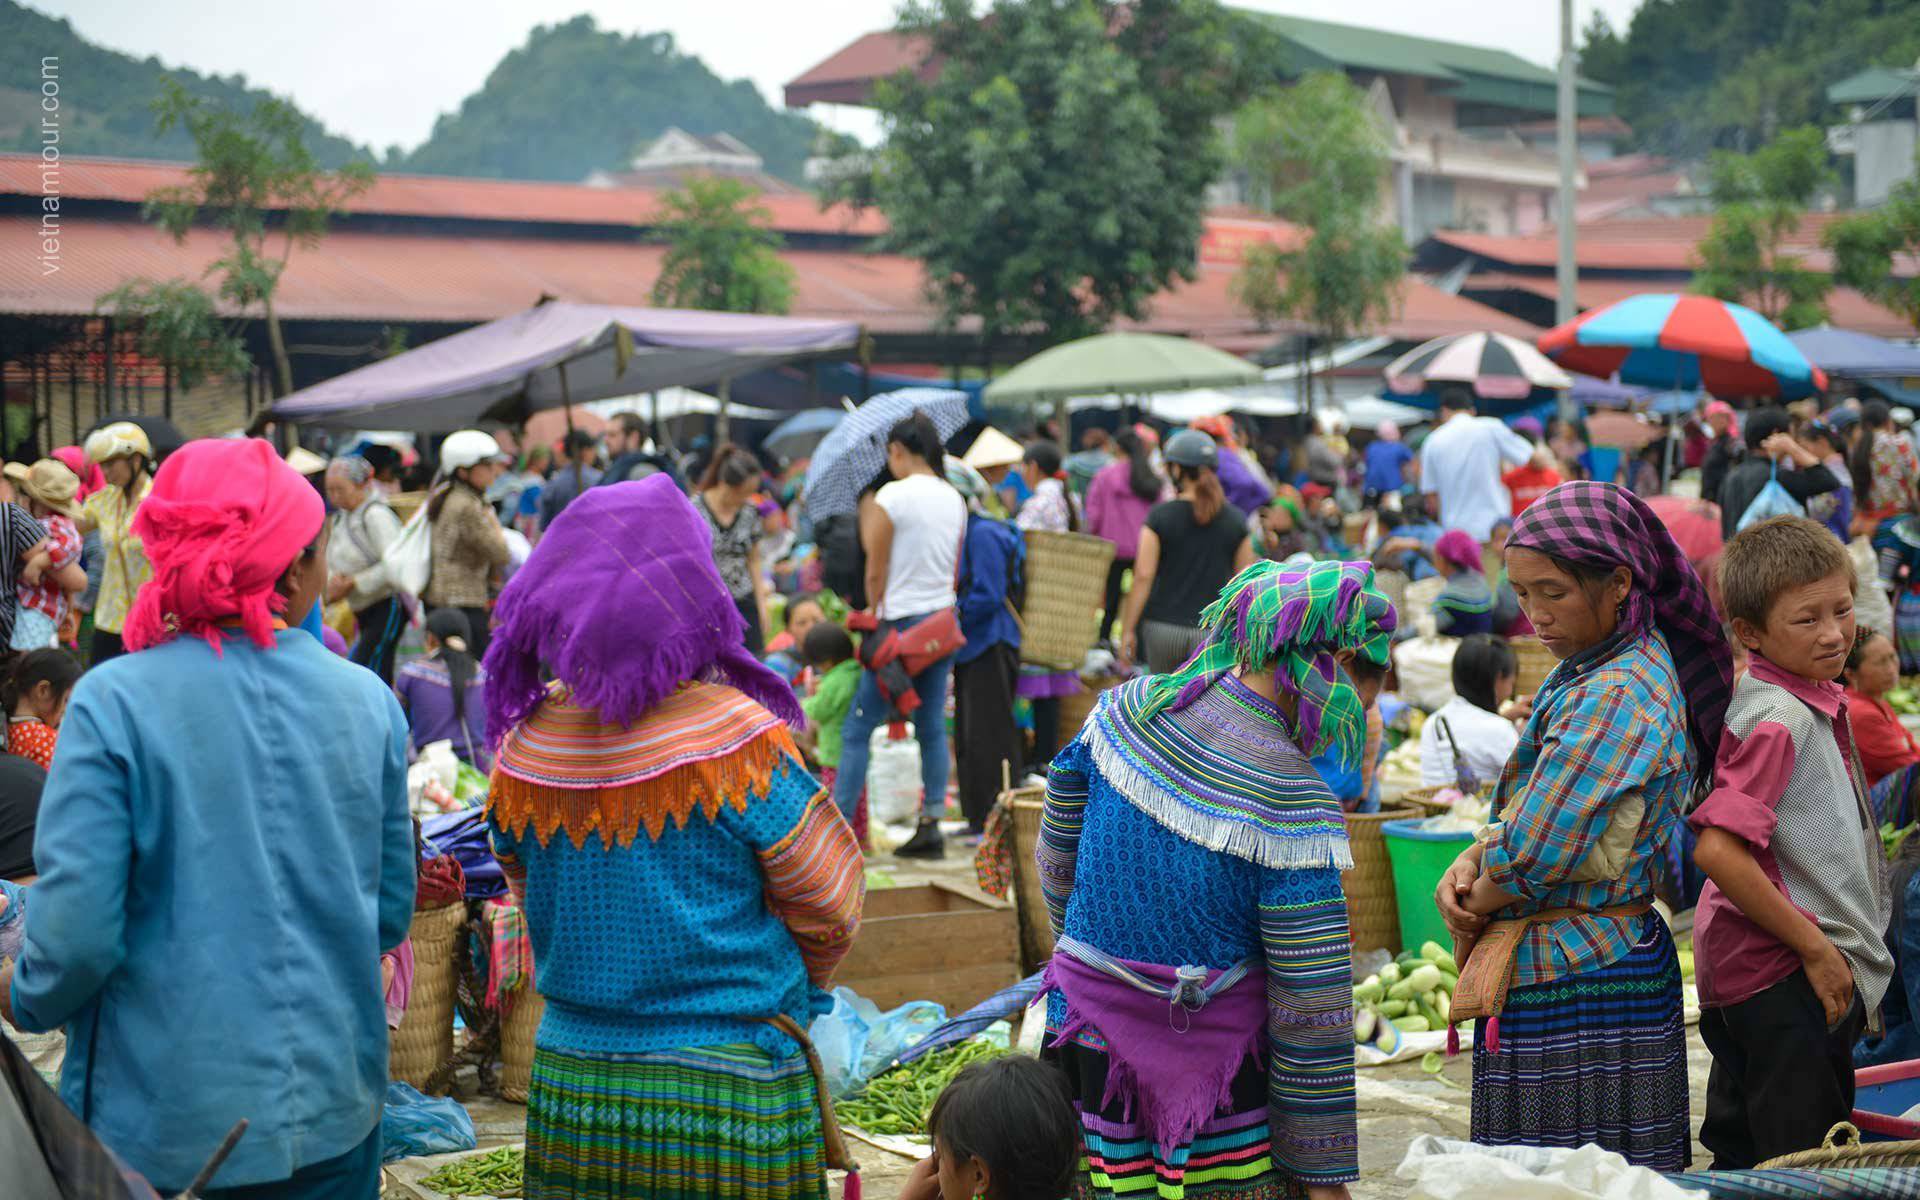 Visit Fair market in Bac Ha